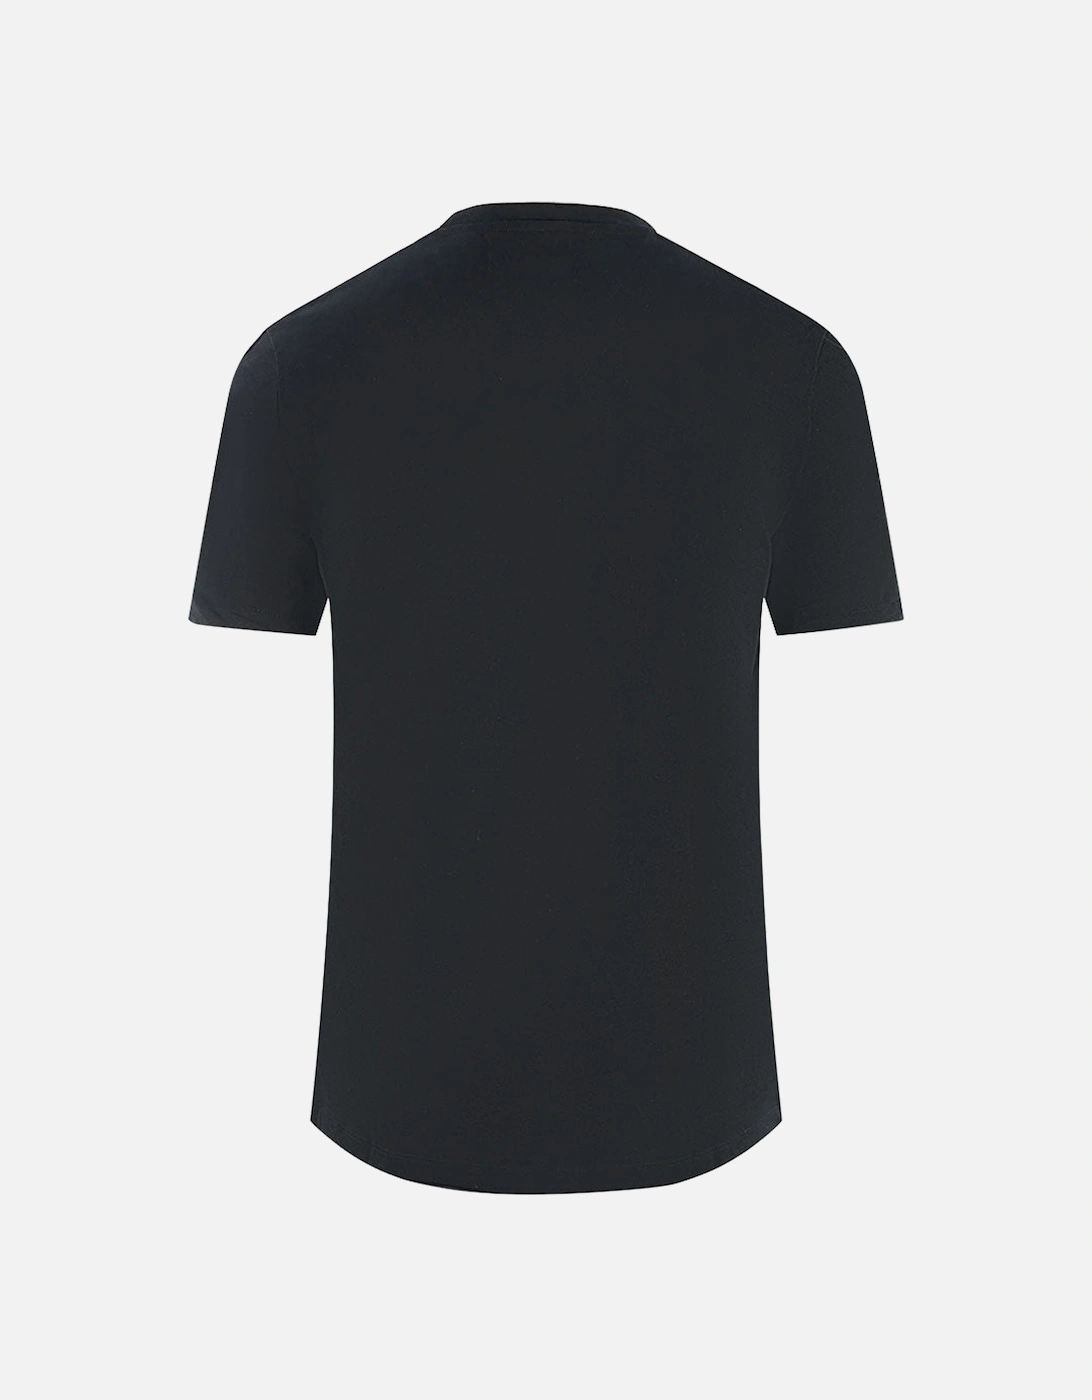 Lyle & Scott Ripstop Pocket Black T-Shirt